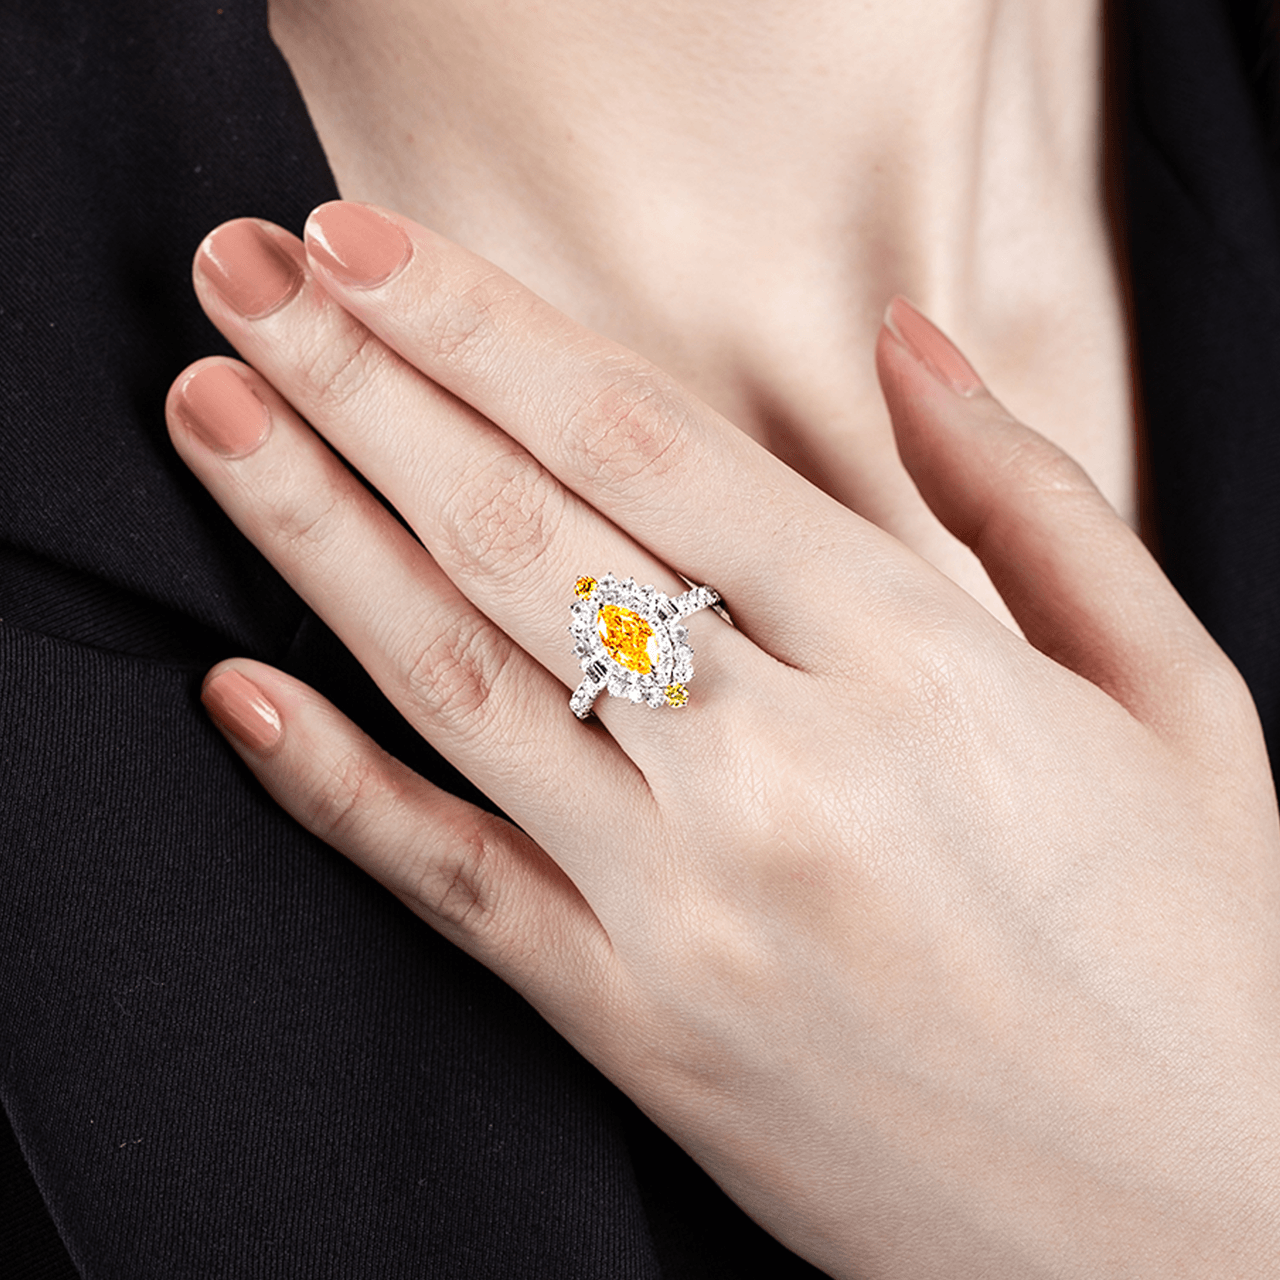 GIA 1.11克拉 艷彩黃橘鑽戒
Fancy Vivid Yellowish Orange 
Colored Diamond Ring